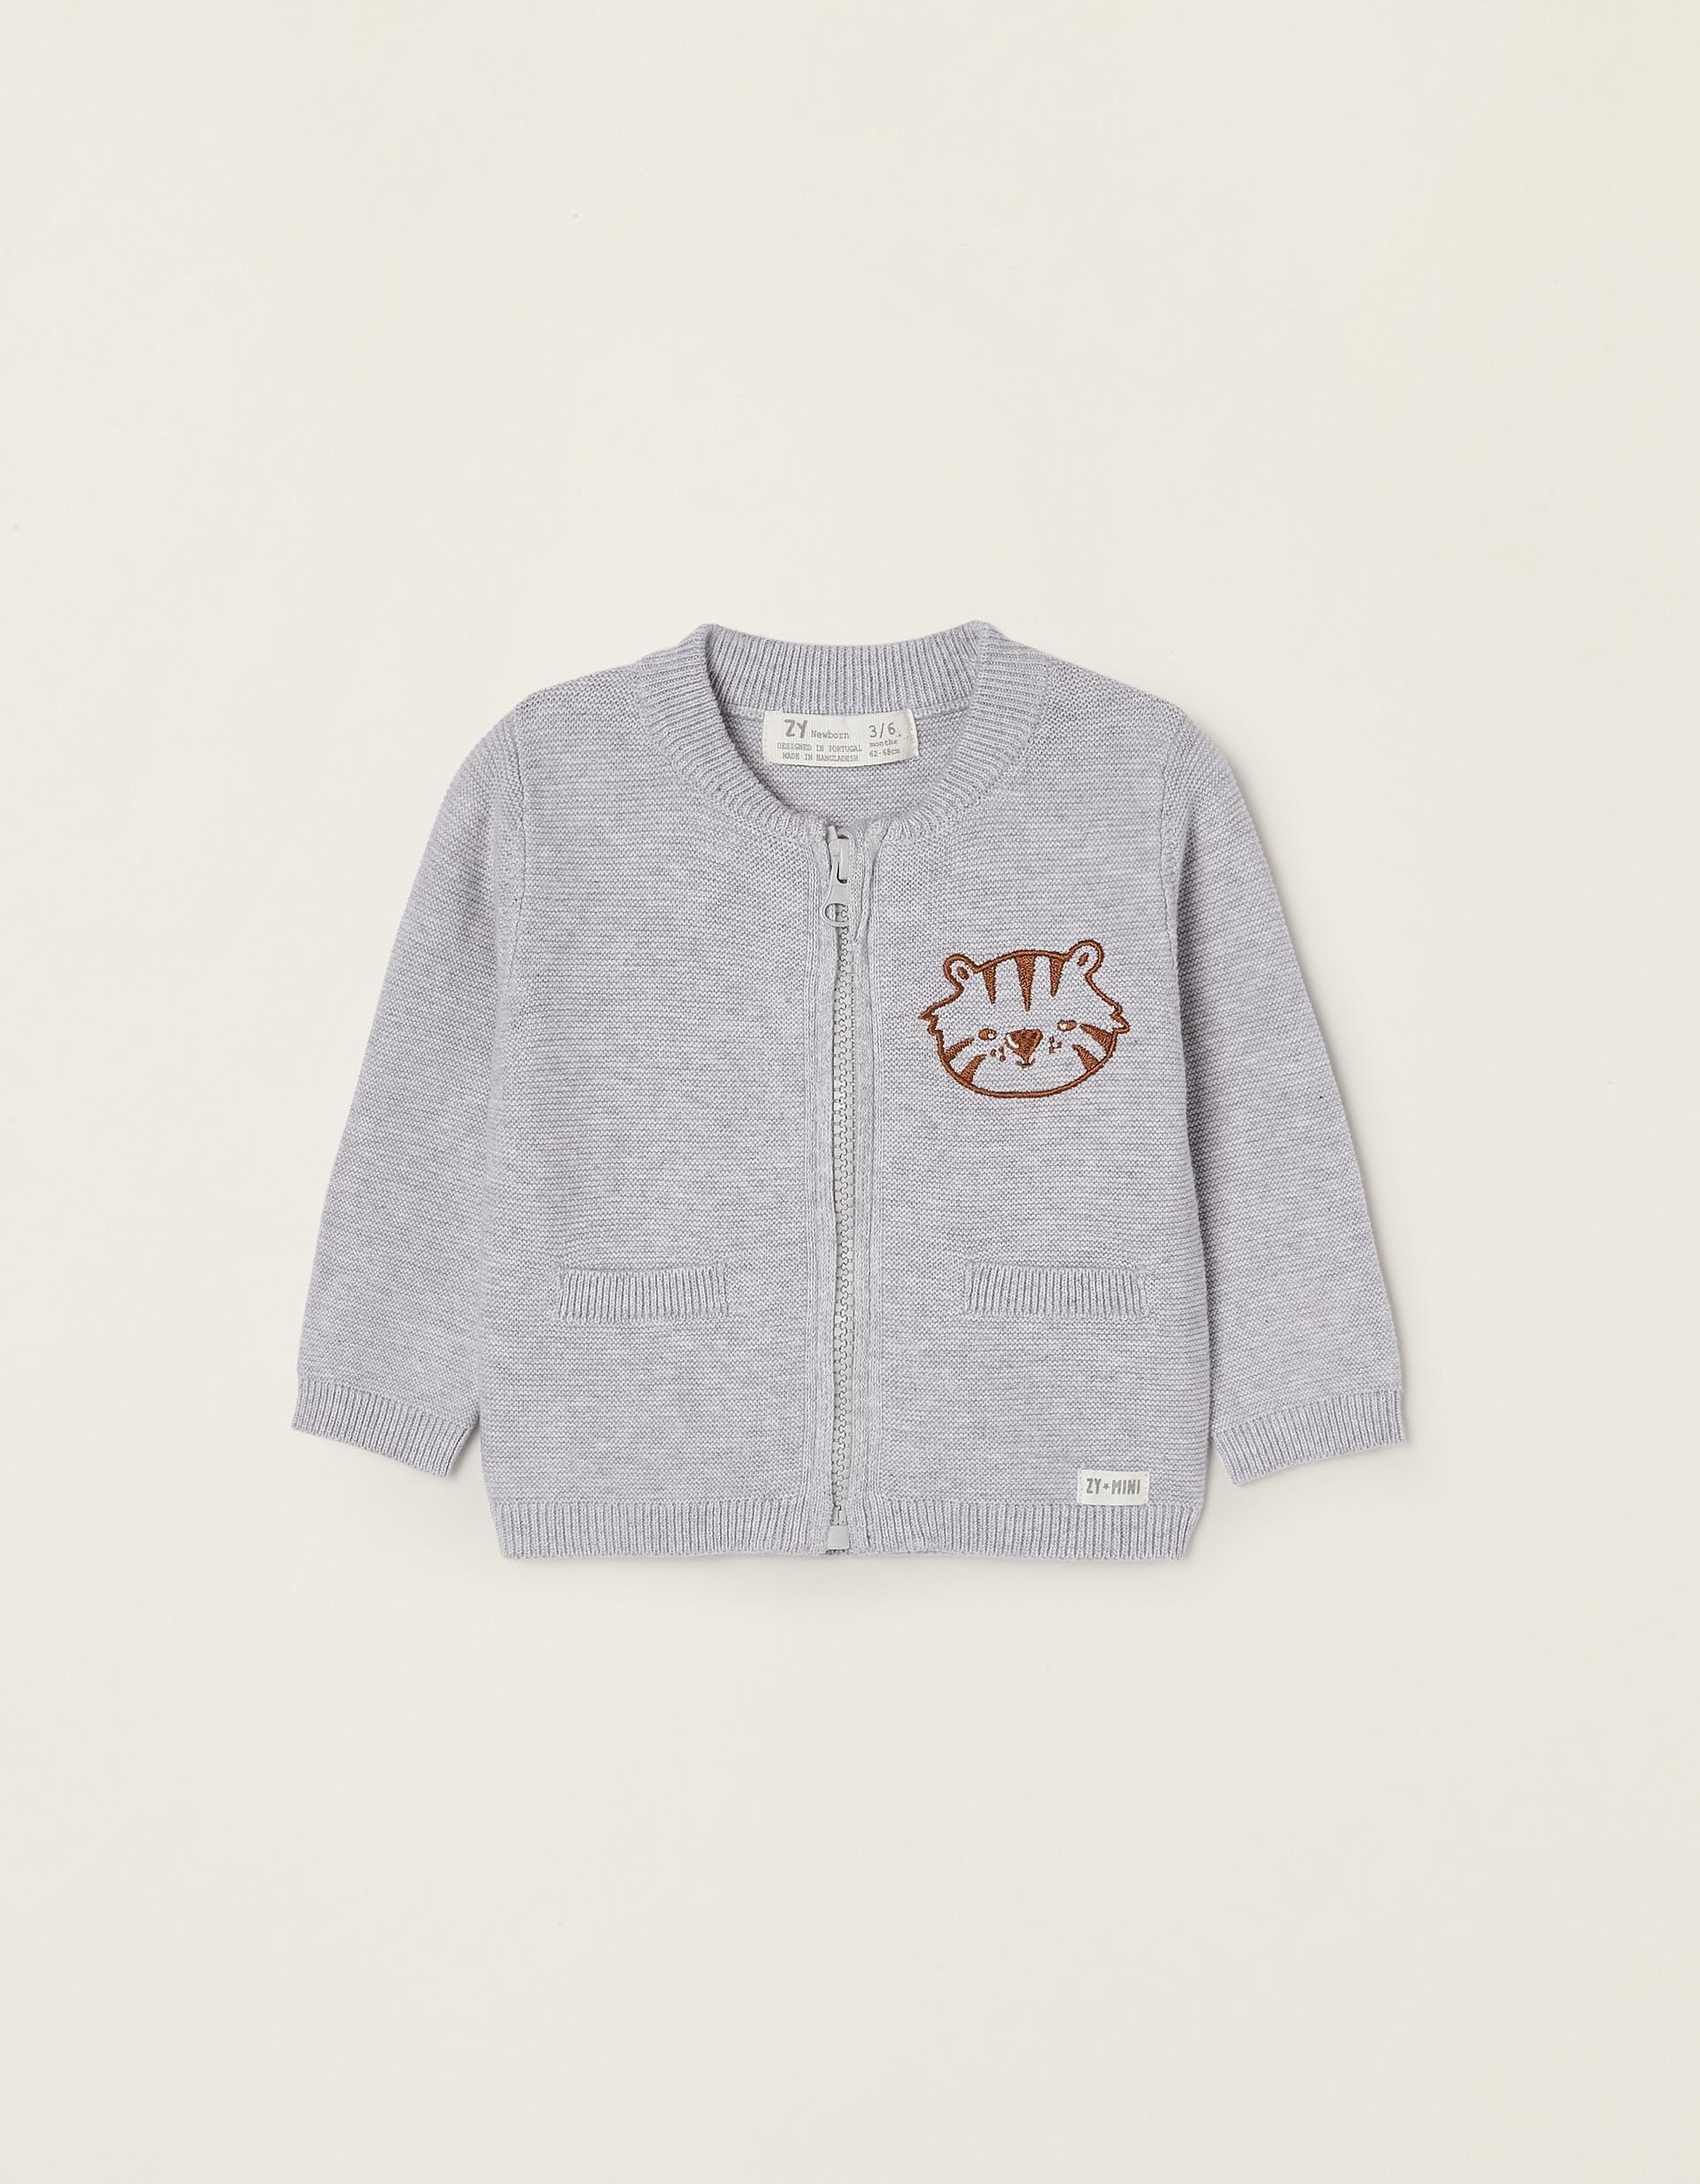 Zippy - Grey Tiger Cotton Cardigan, Baby Boys